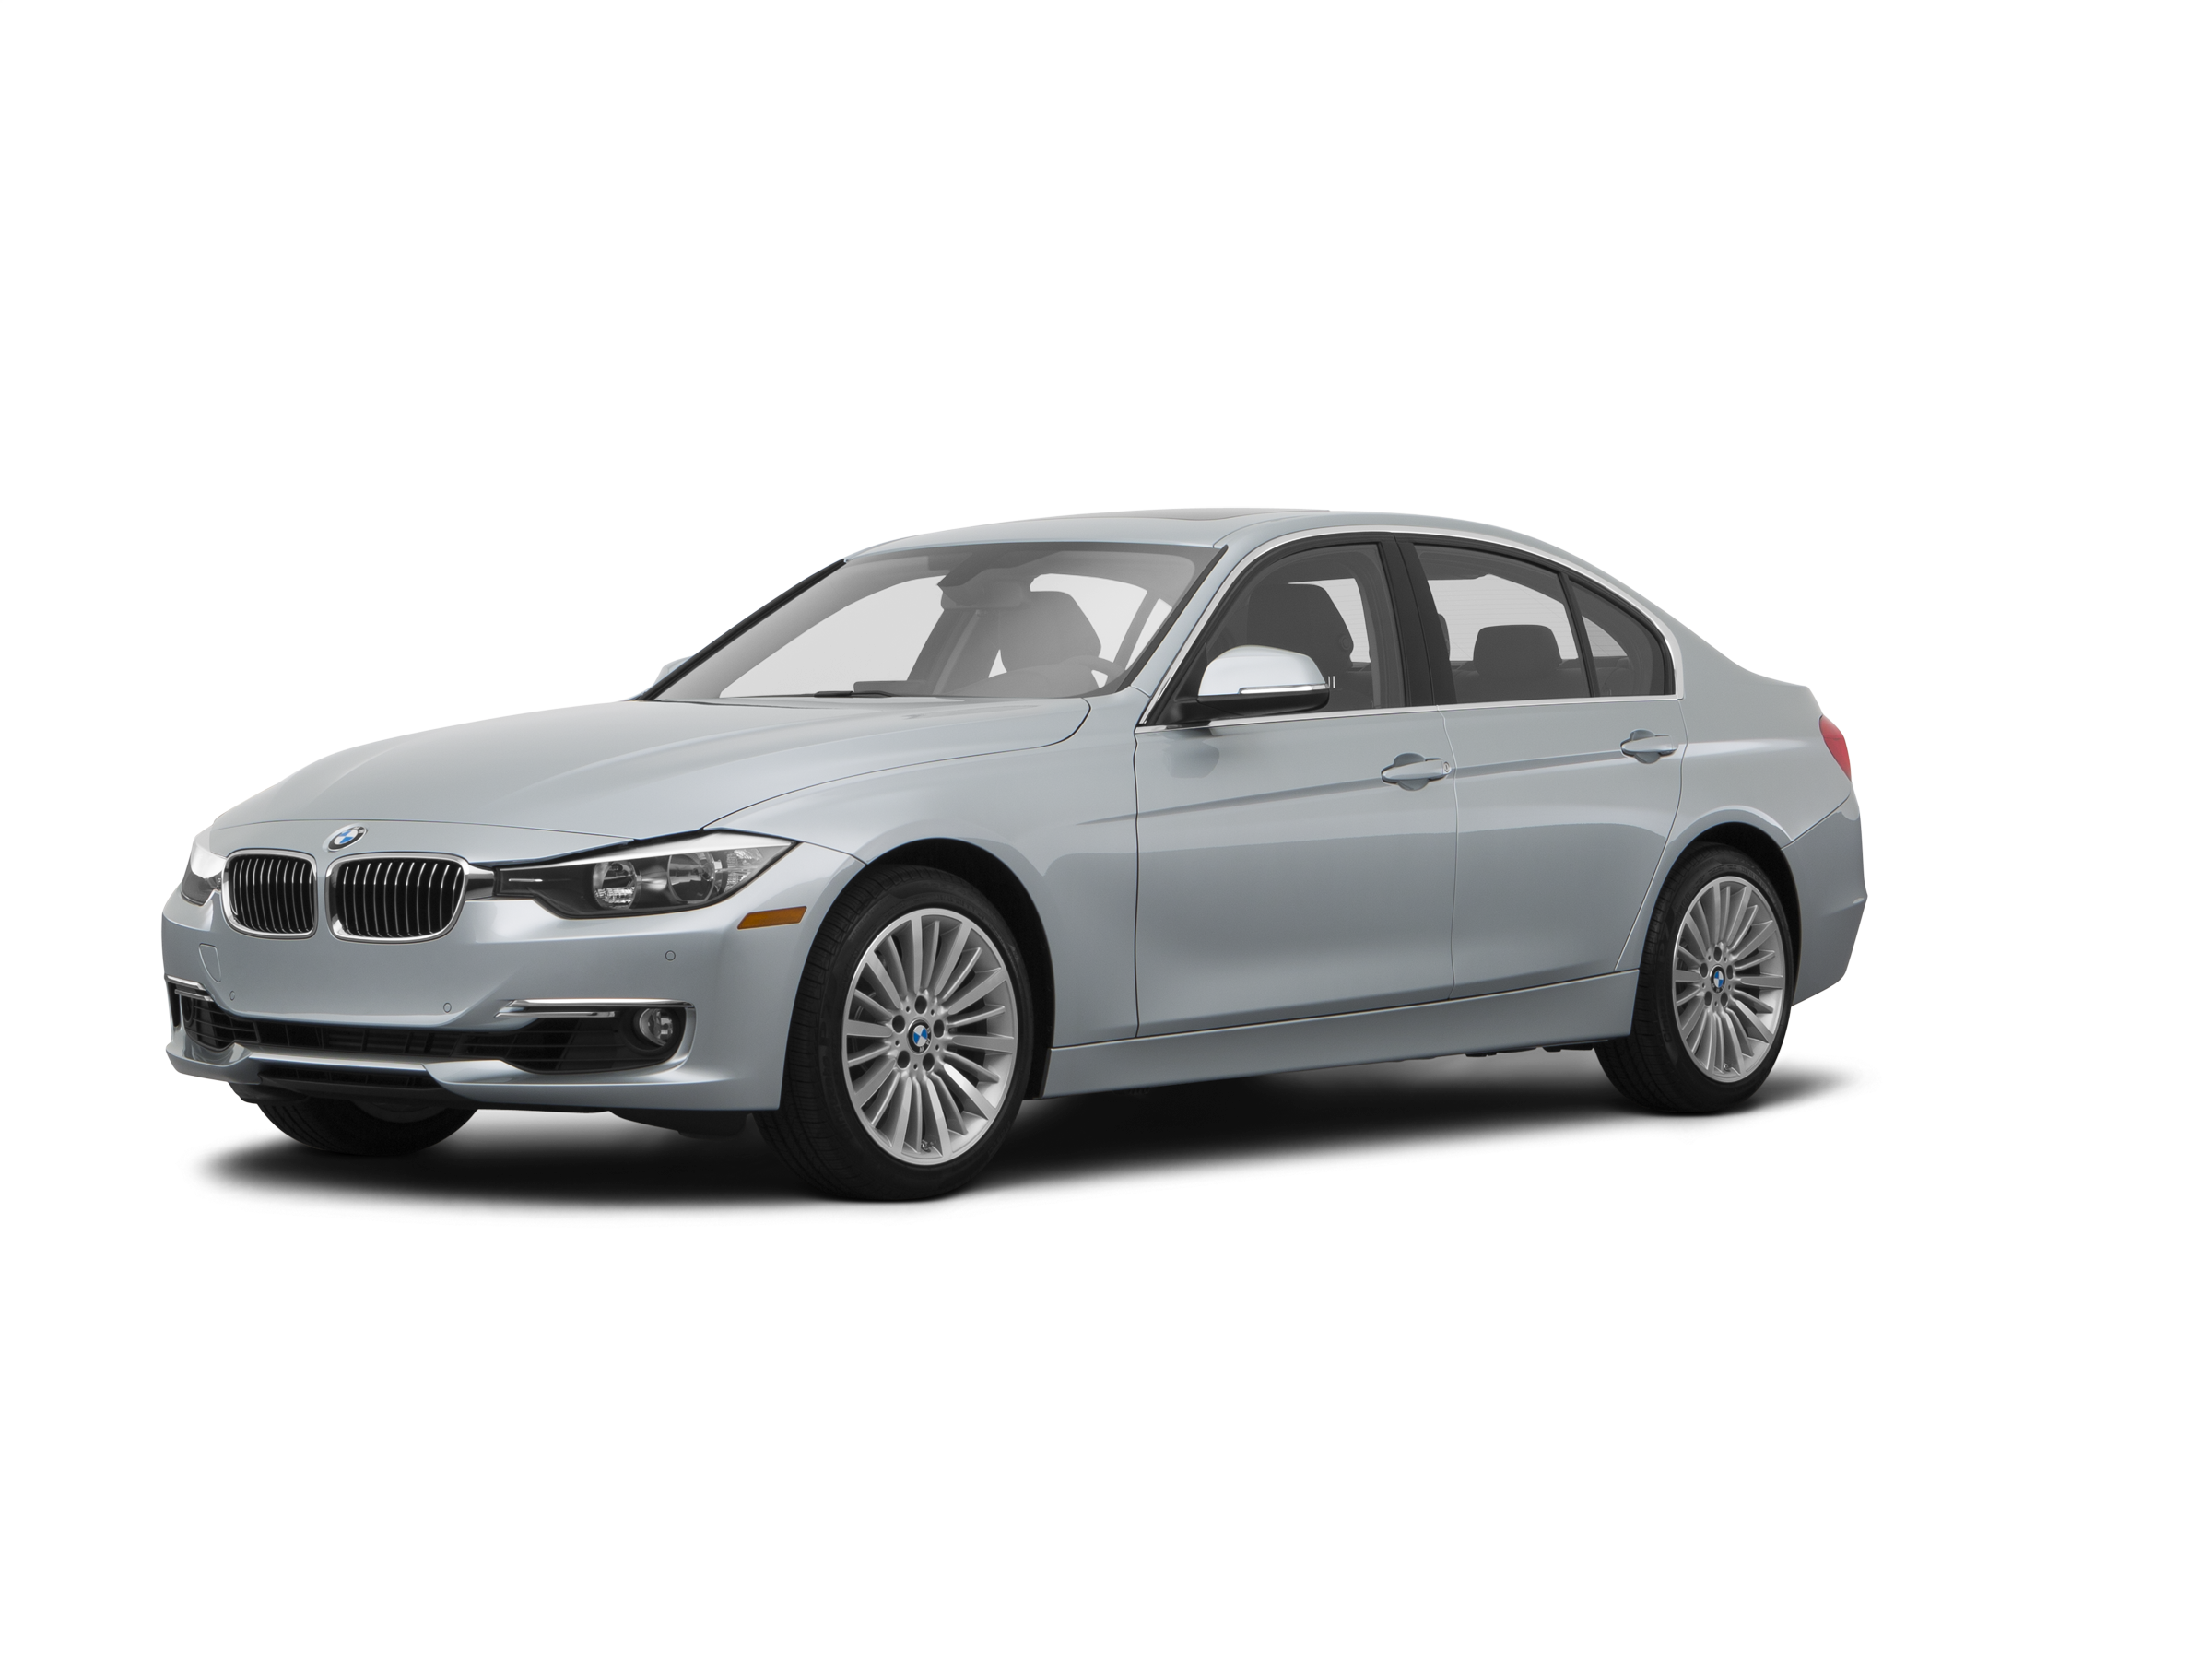 Mua bán BMW 320i 2015 giá 855 triệu  3396521